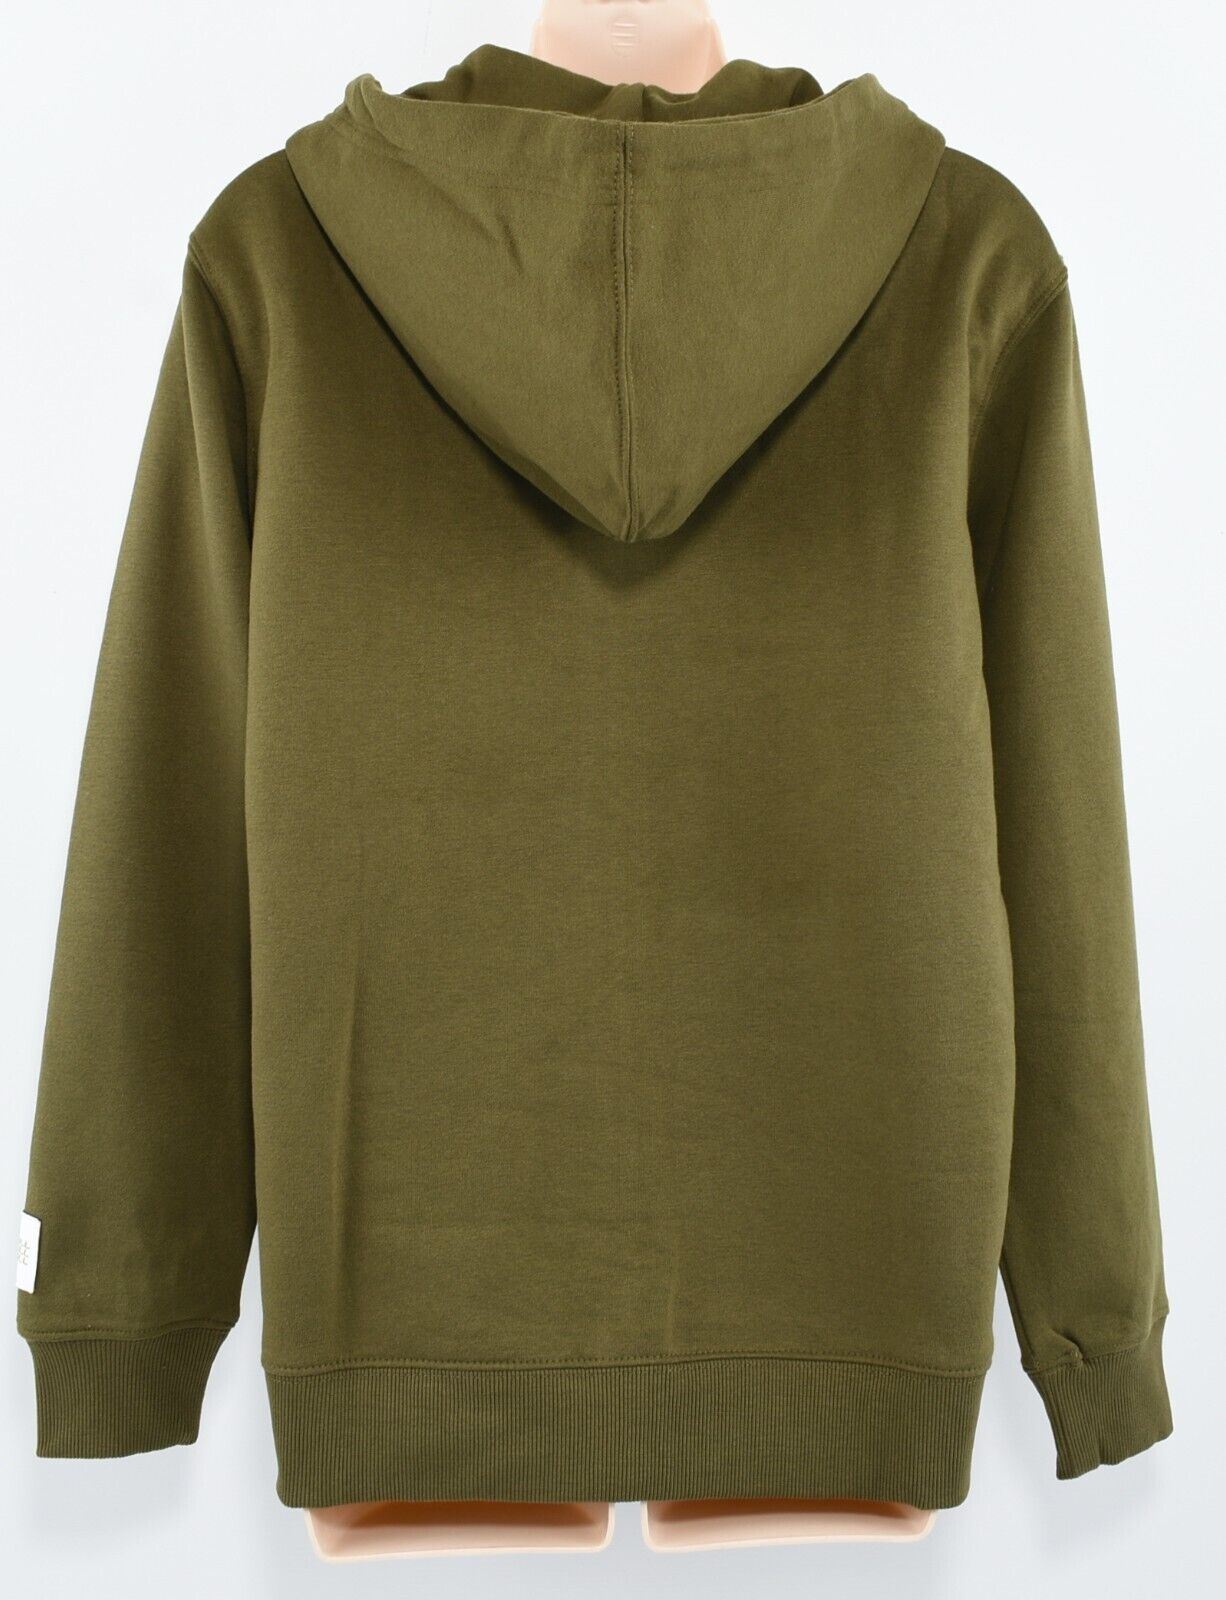 O'NEILL Women's CALI Full Zip Hoodie Jacket, Winter Moss (Green), size M - UK 12